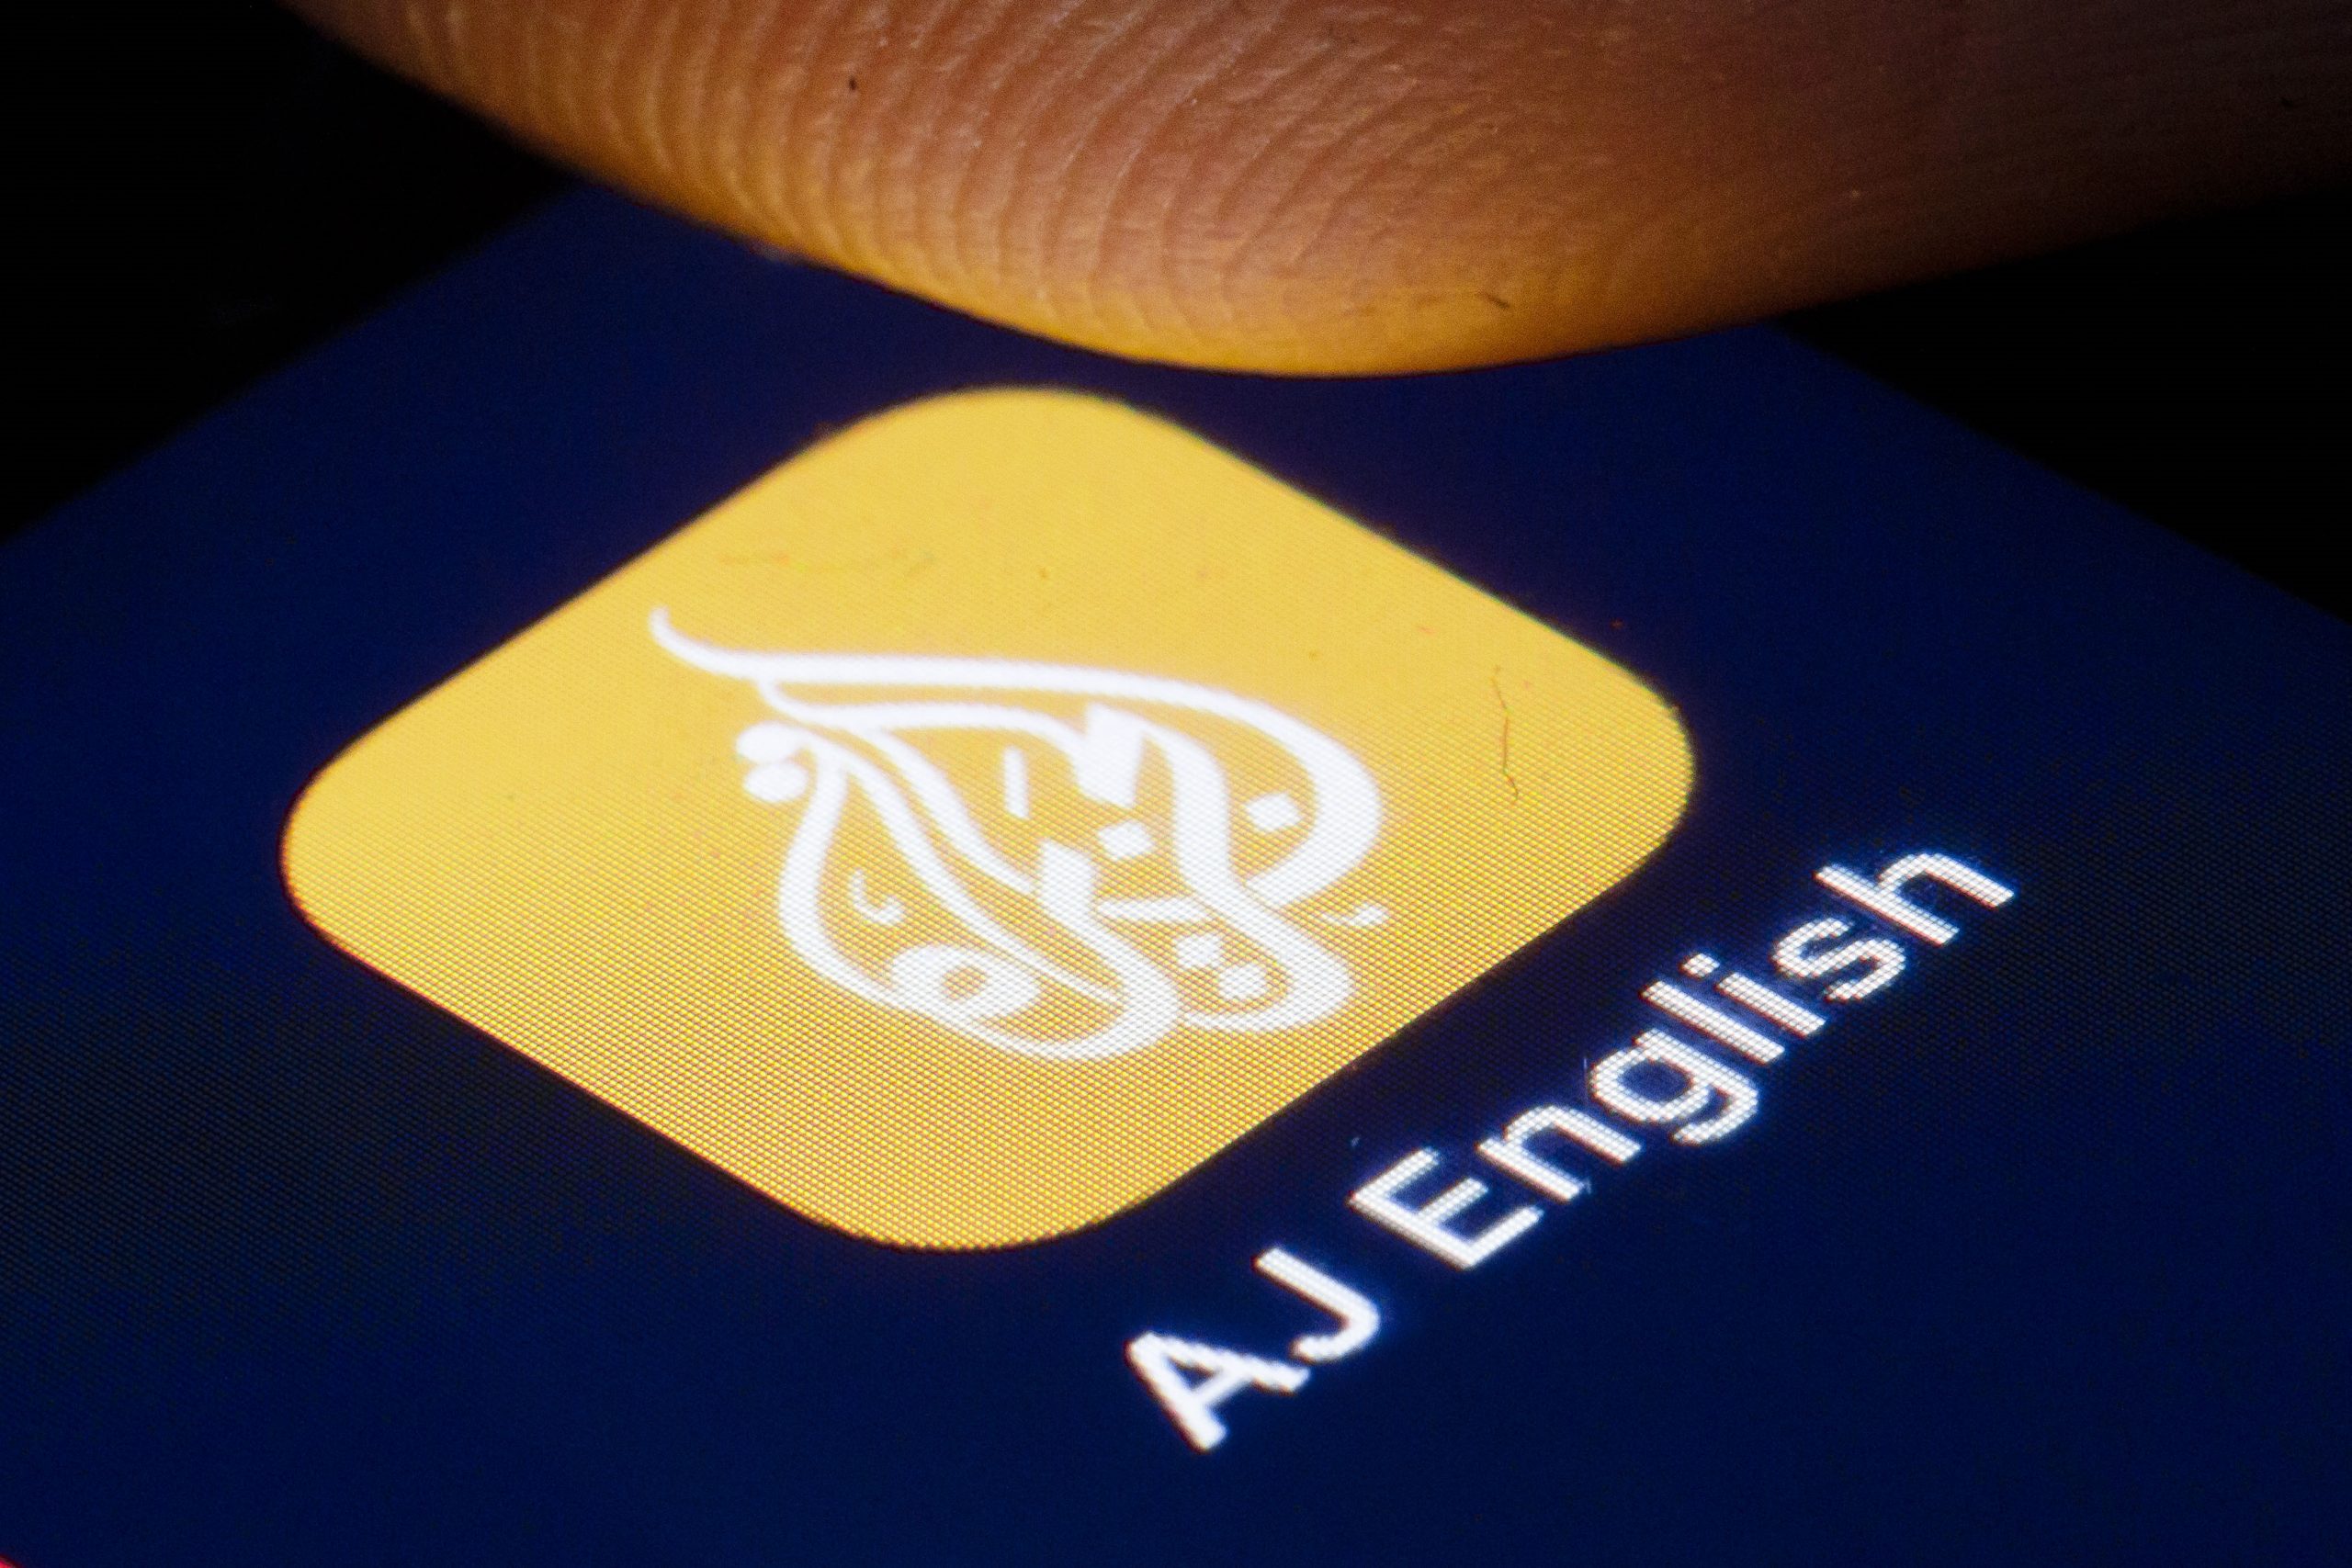 iPhone security flaw let spies hack dozens of Al Jazeera journalists | DeviceDaily.com